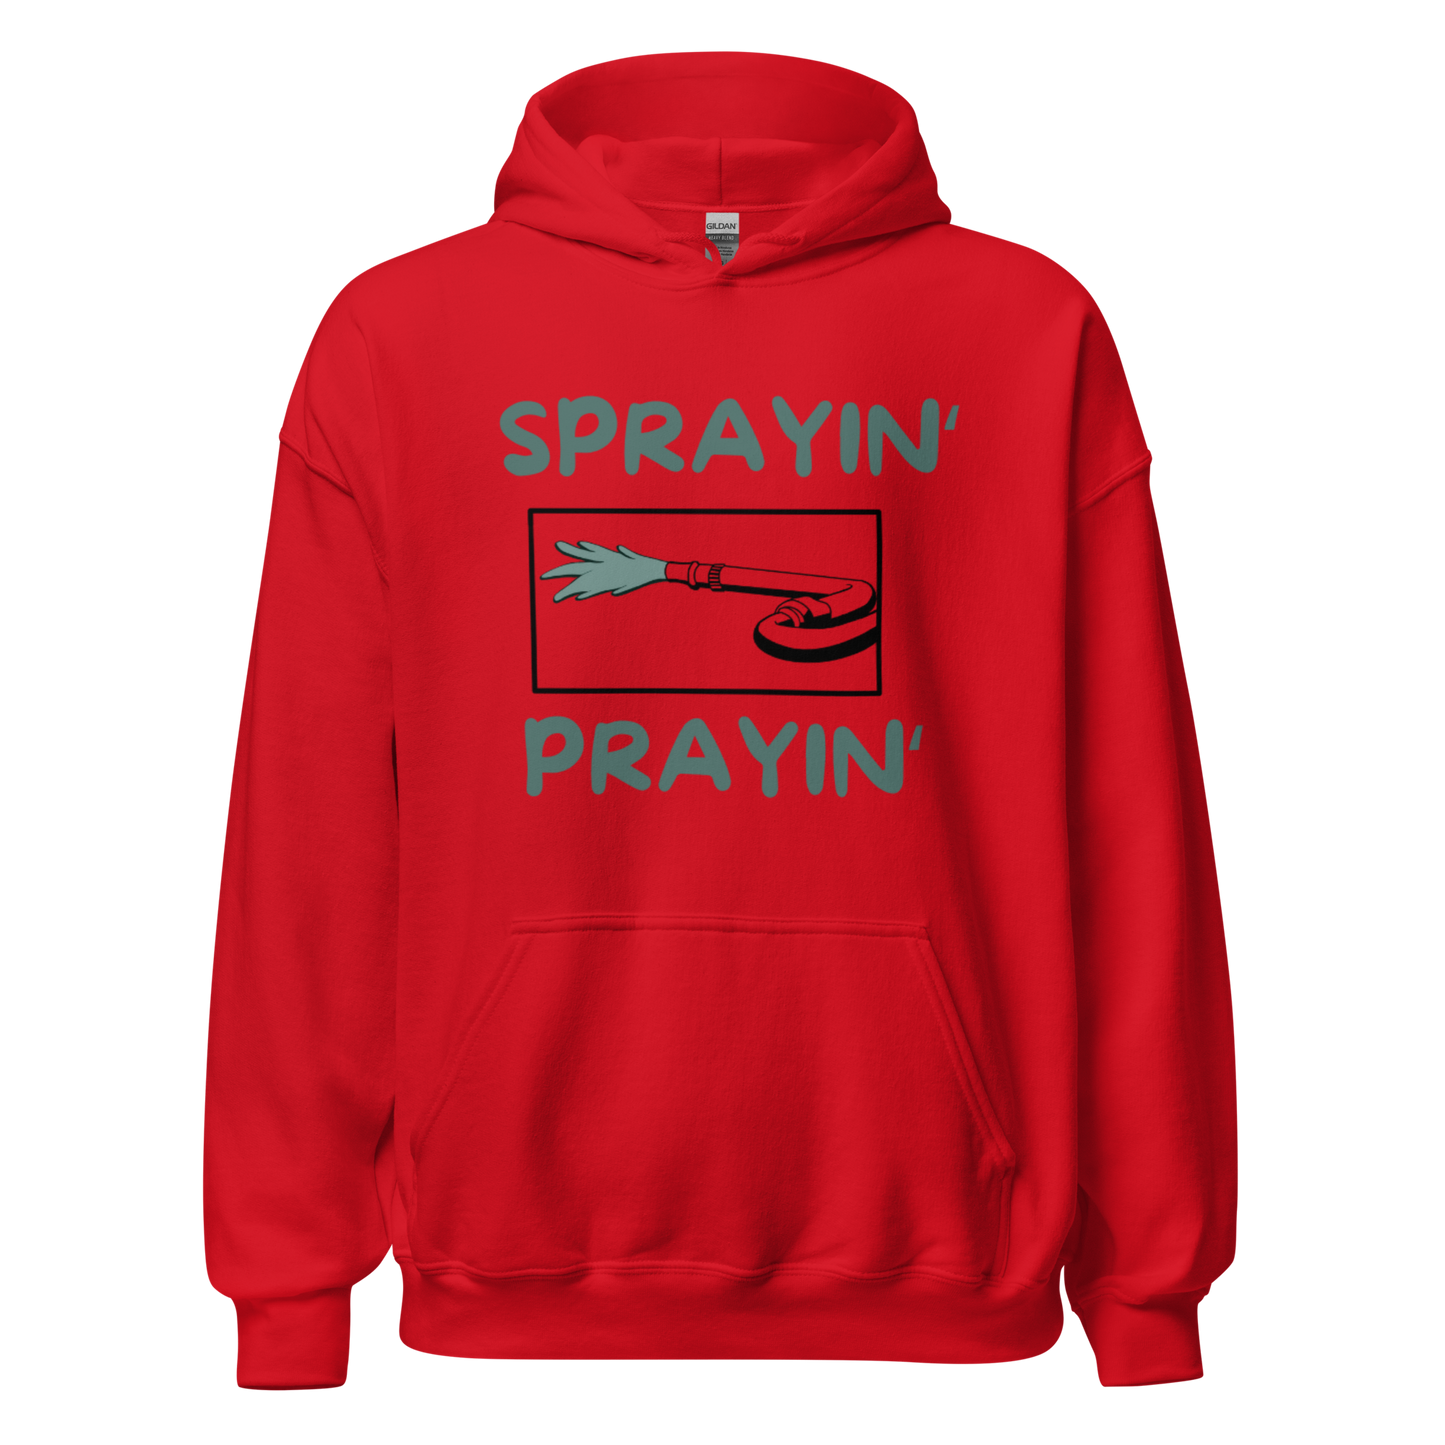 Sprayin' Prayin' - Unisex Hoodie